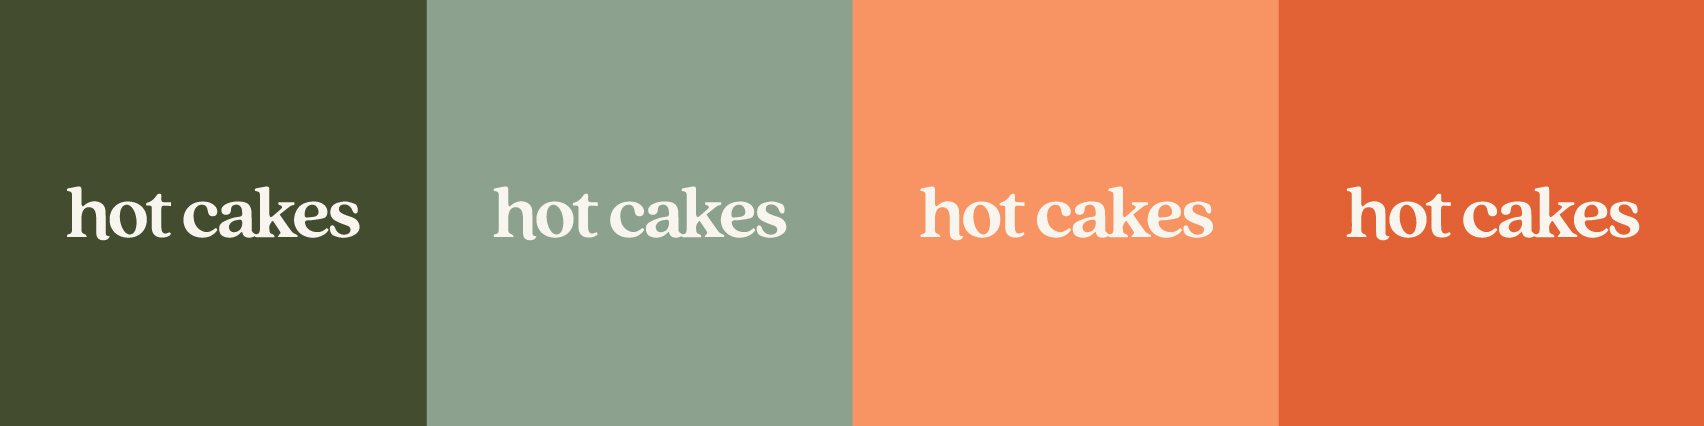 Hotcakes_Case_Colors